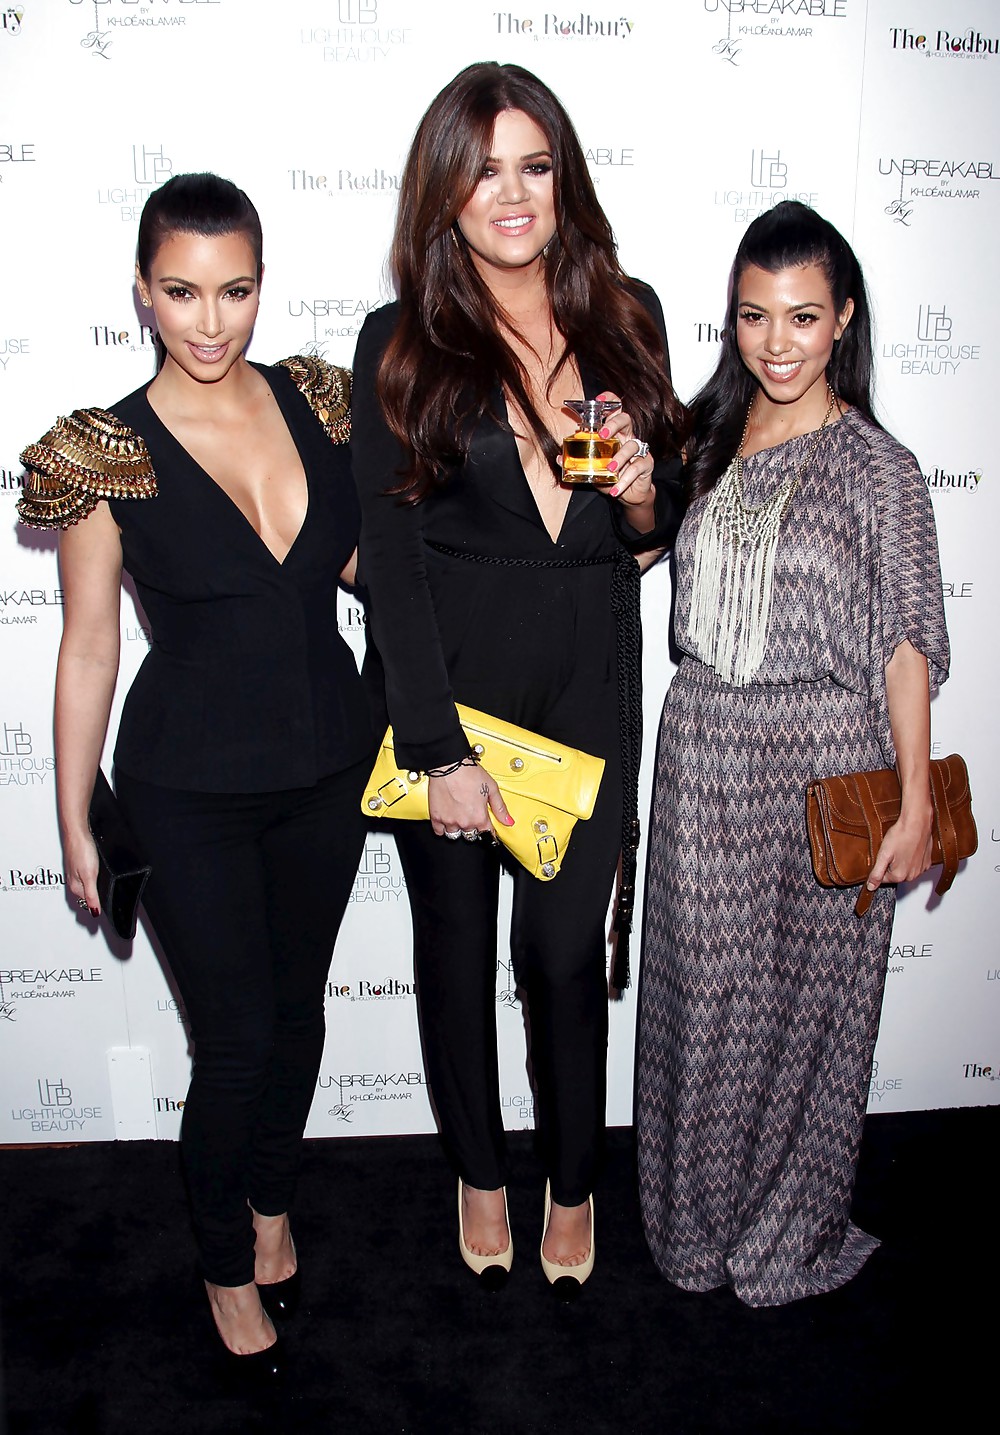 Kim Kardashian Unbreakable Fragrance Launch in Hollywood #4493084